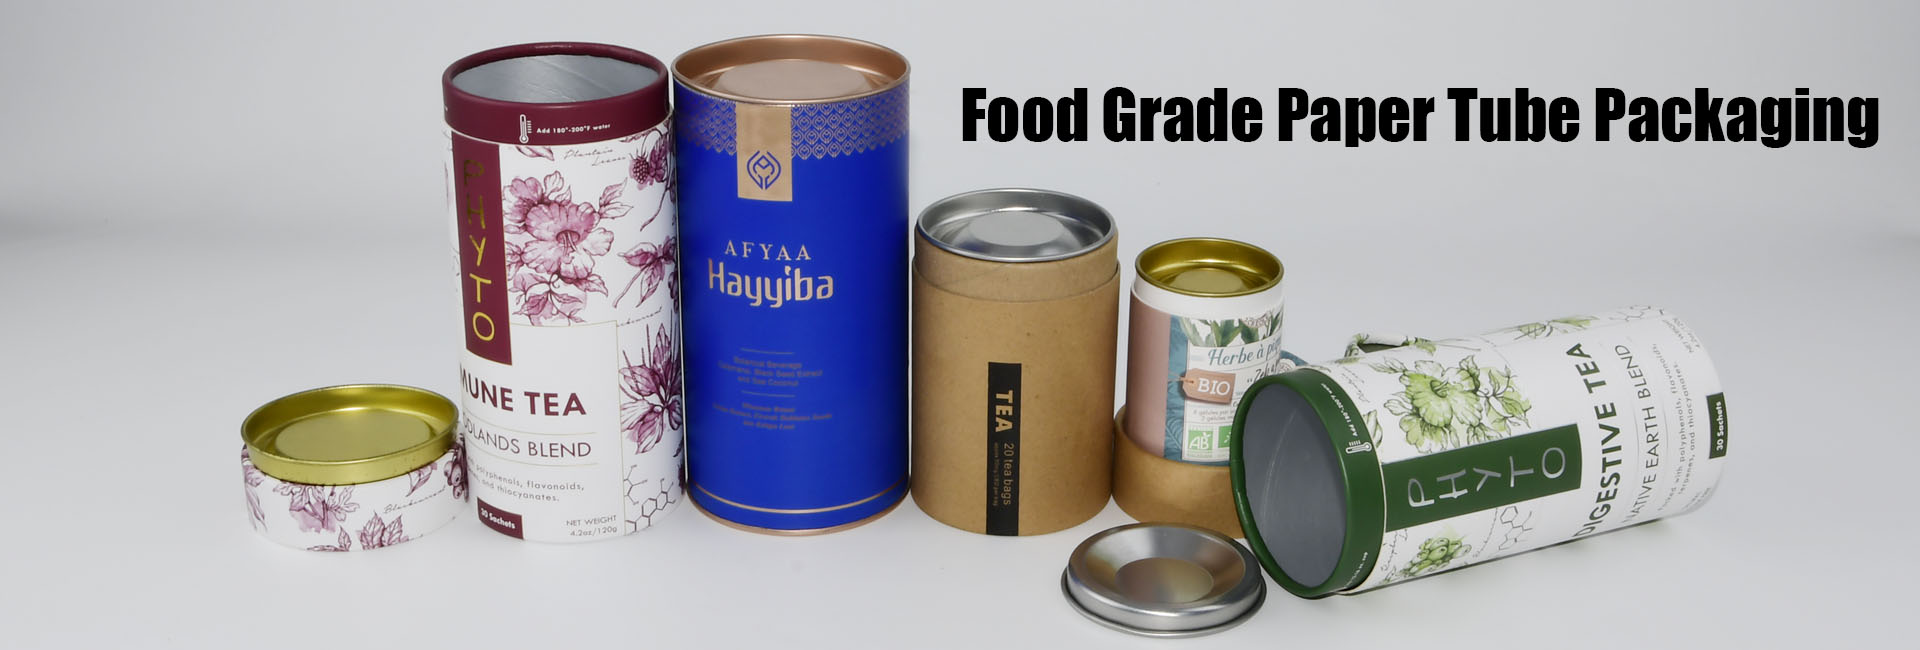 Food Grade Paper Tube Packaging 